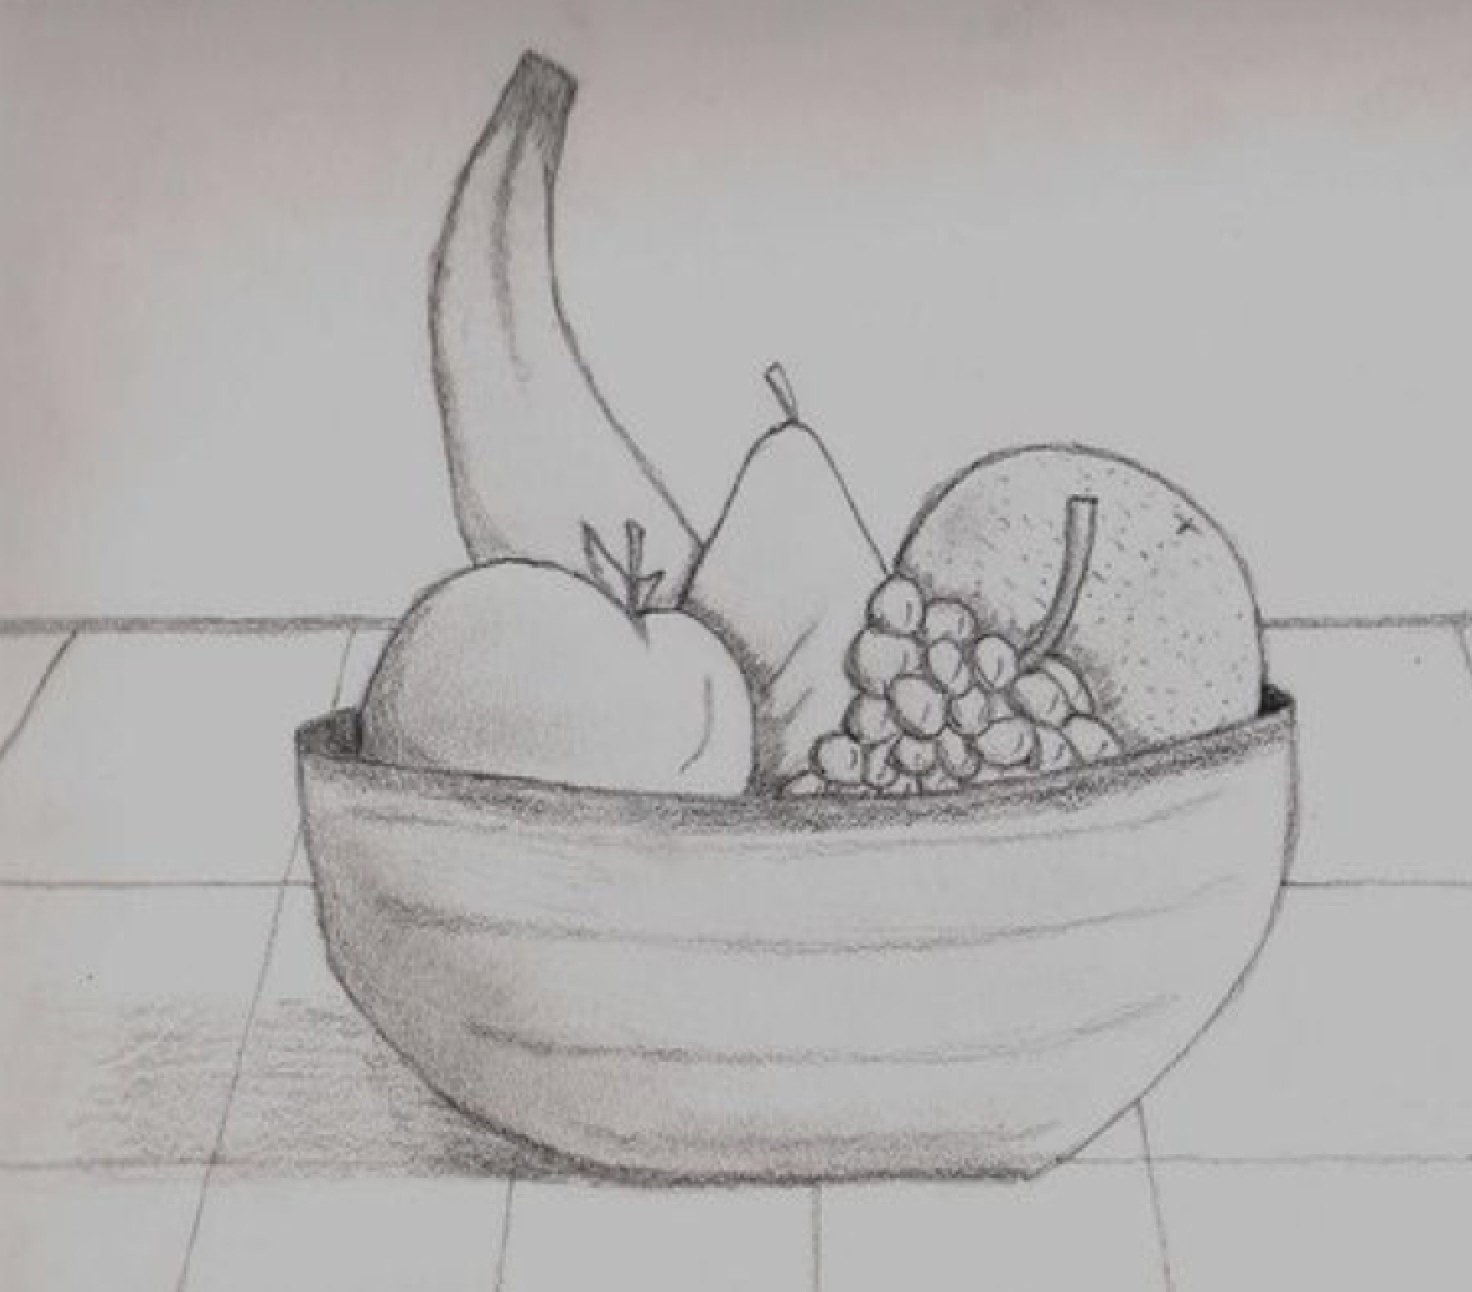 Ваза рисунок карандашом с фруктами